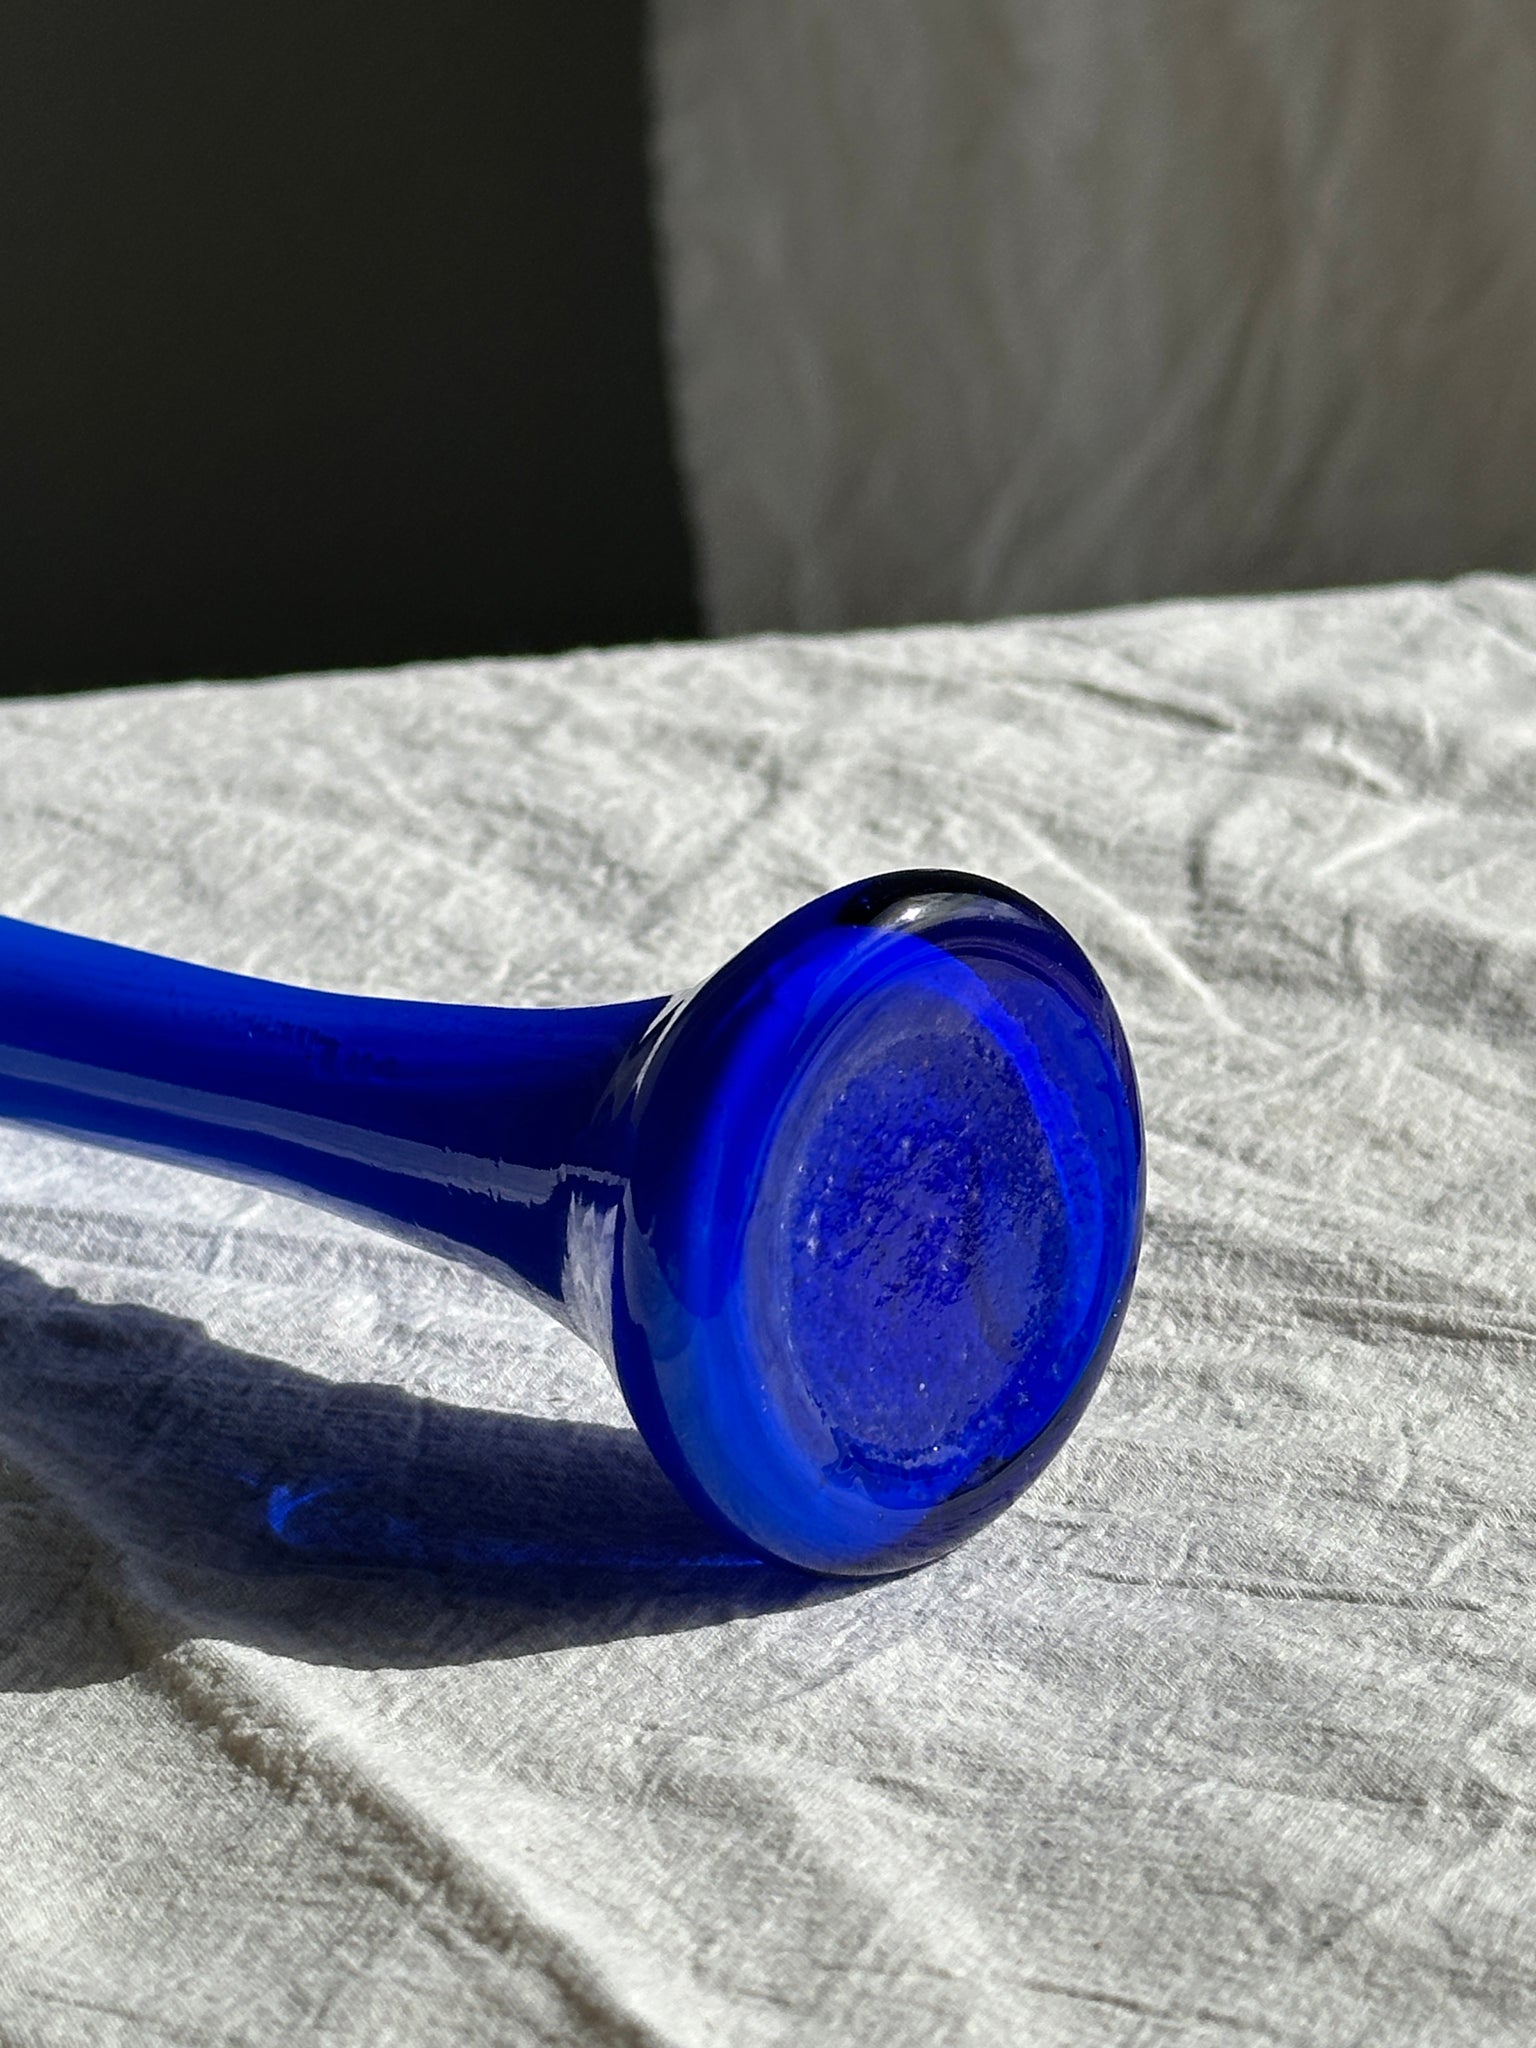 Petit vase soliflore bleu